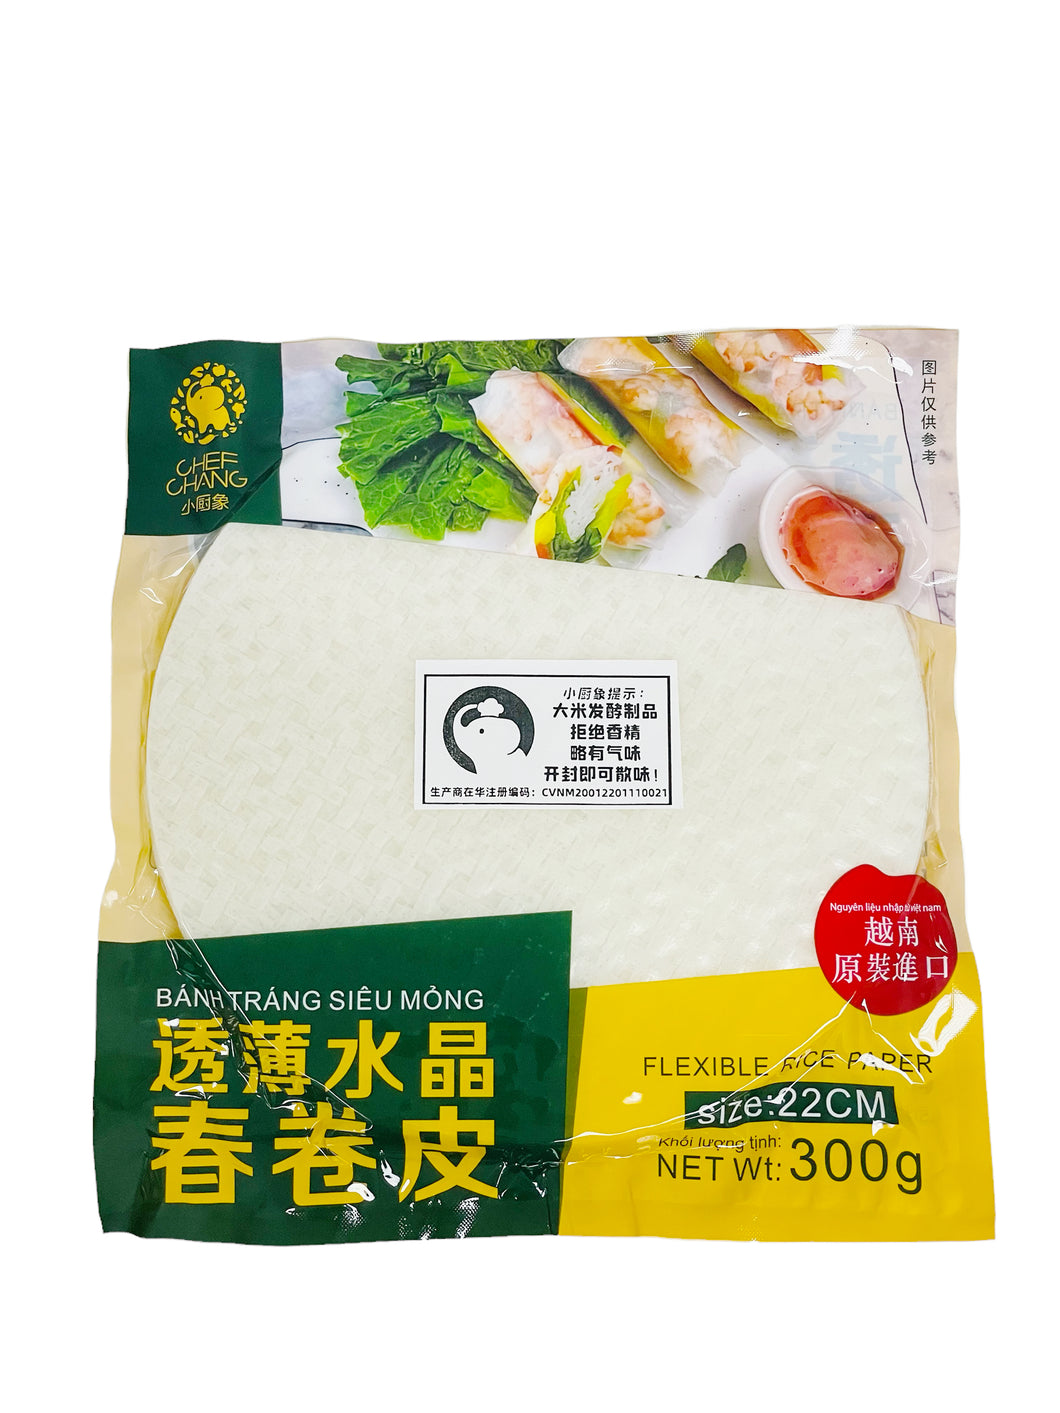 Flexible Rice Paper 300g 越南春卷皮